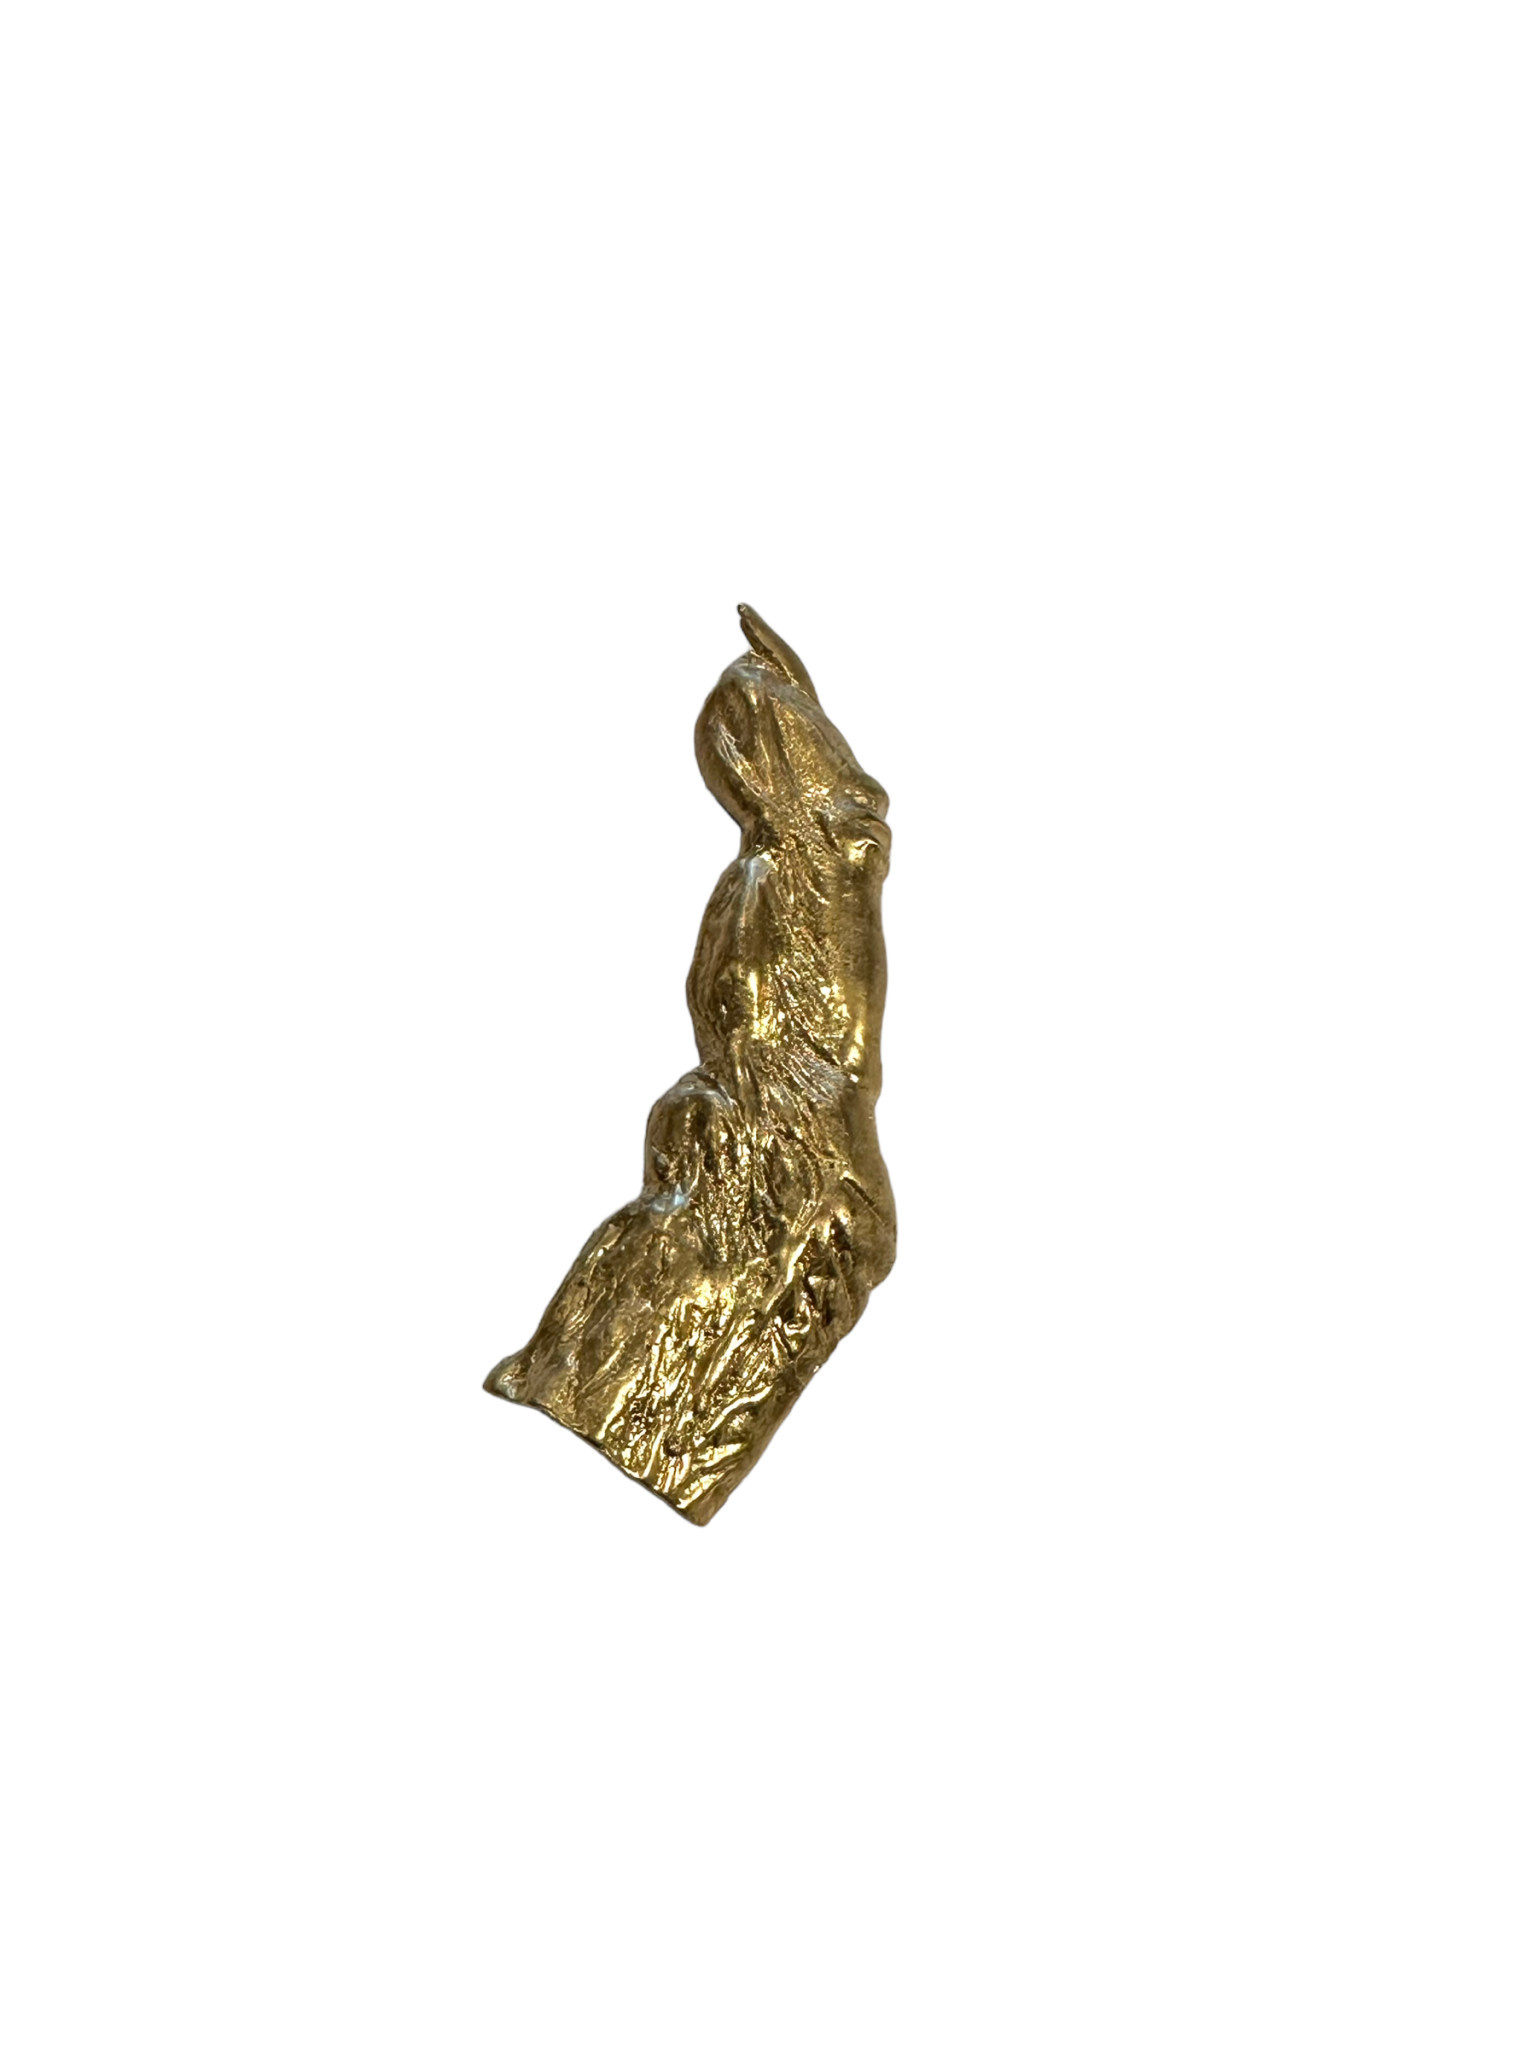 Lisa Roet - Chimp Finger Brooch - Brass Gold Plated-1